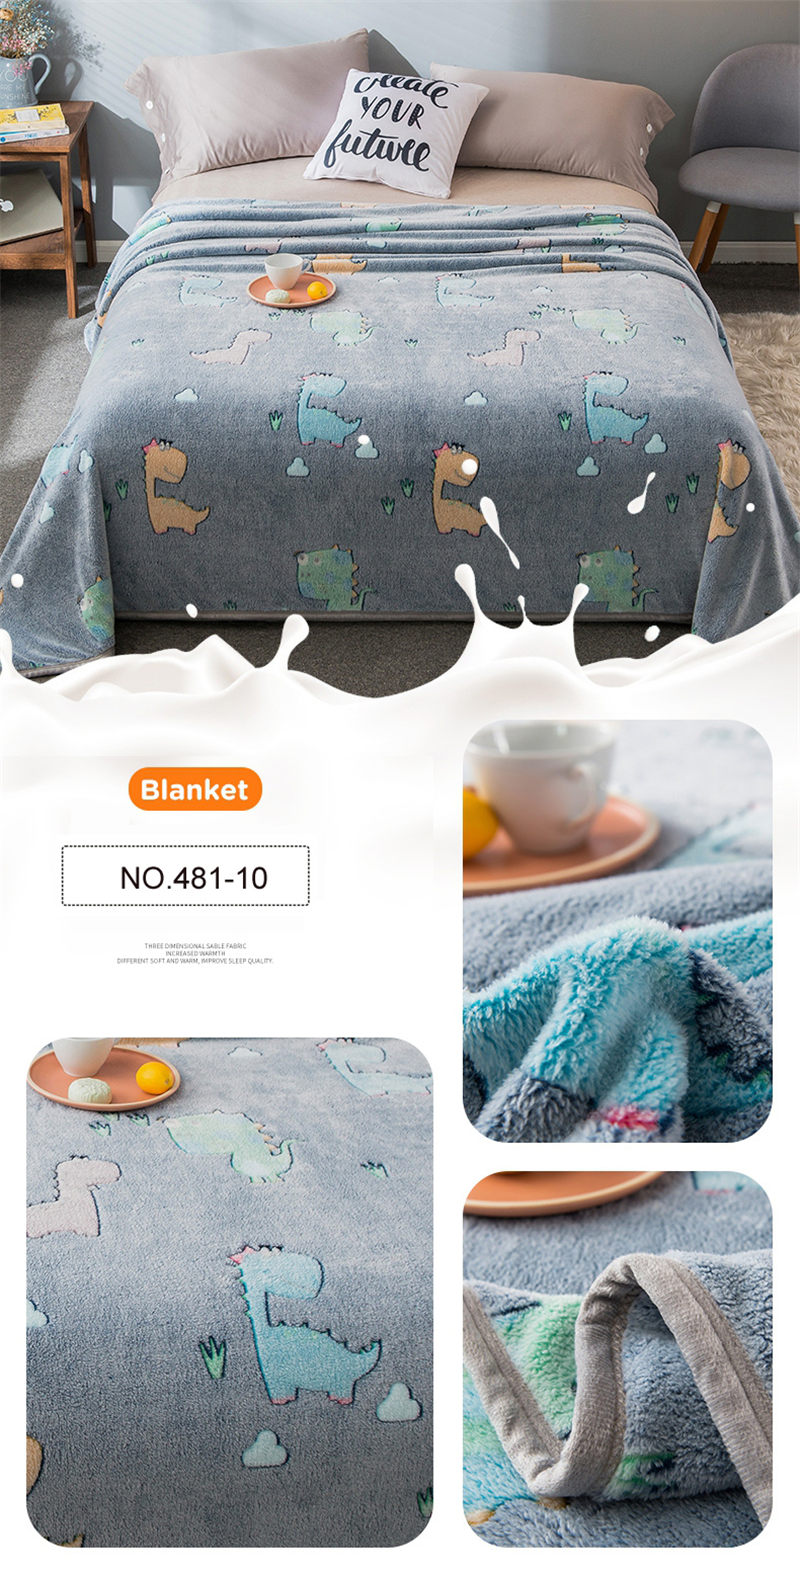 Dual-Sided Picnic Blanket For Full